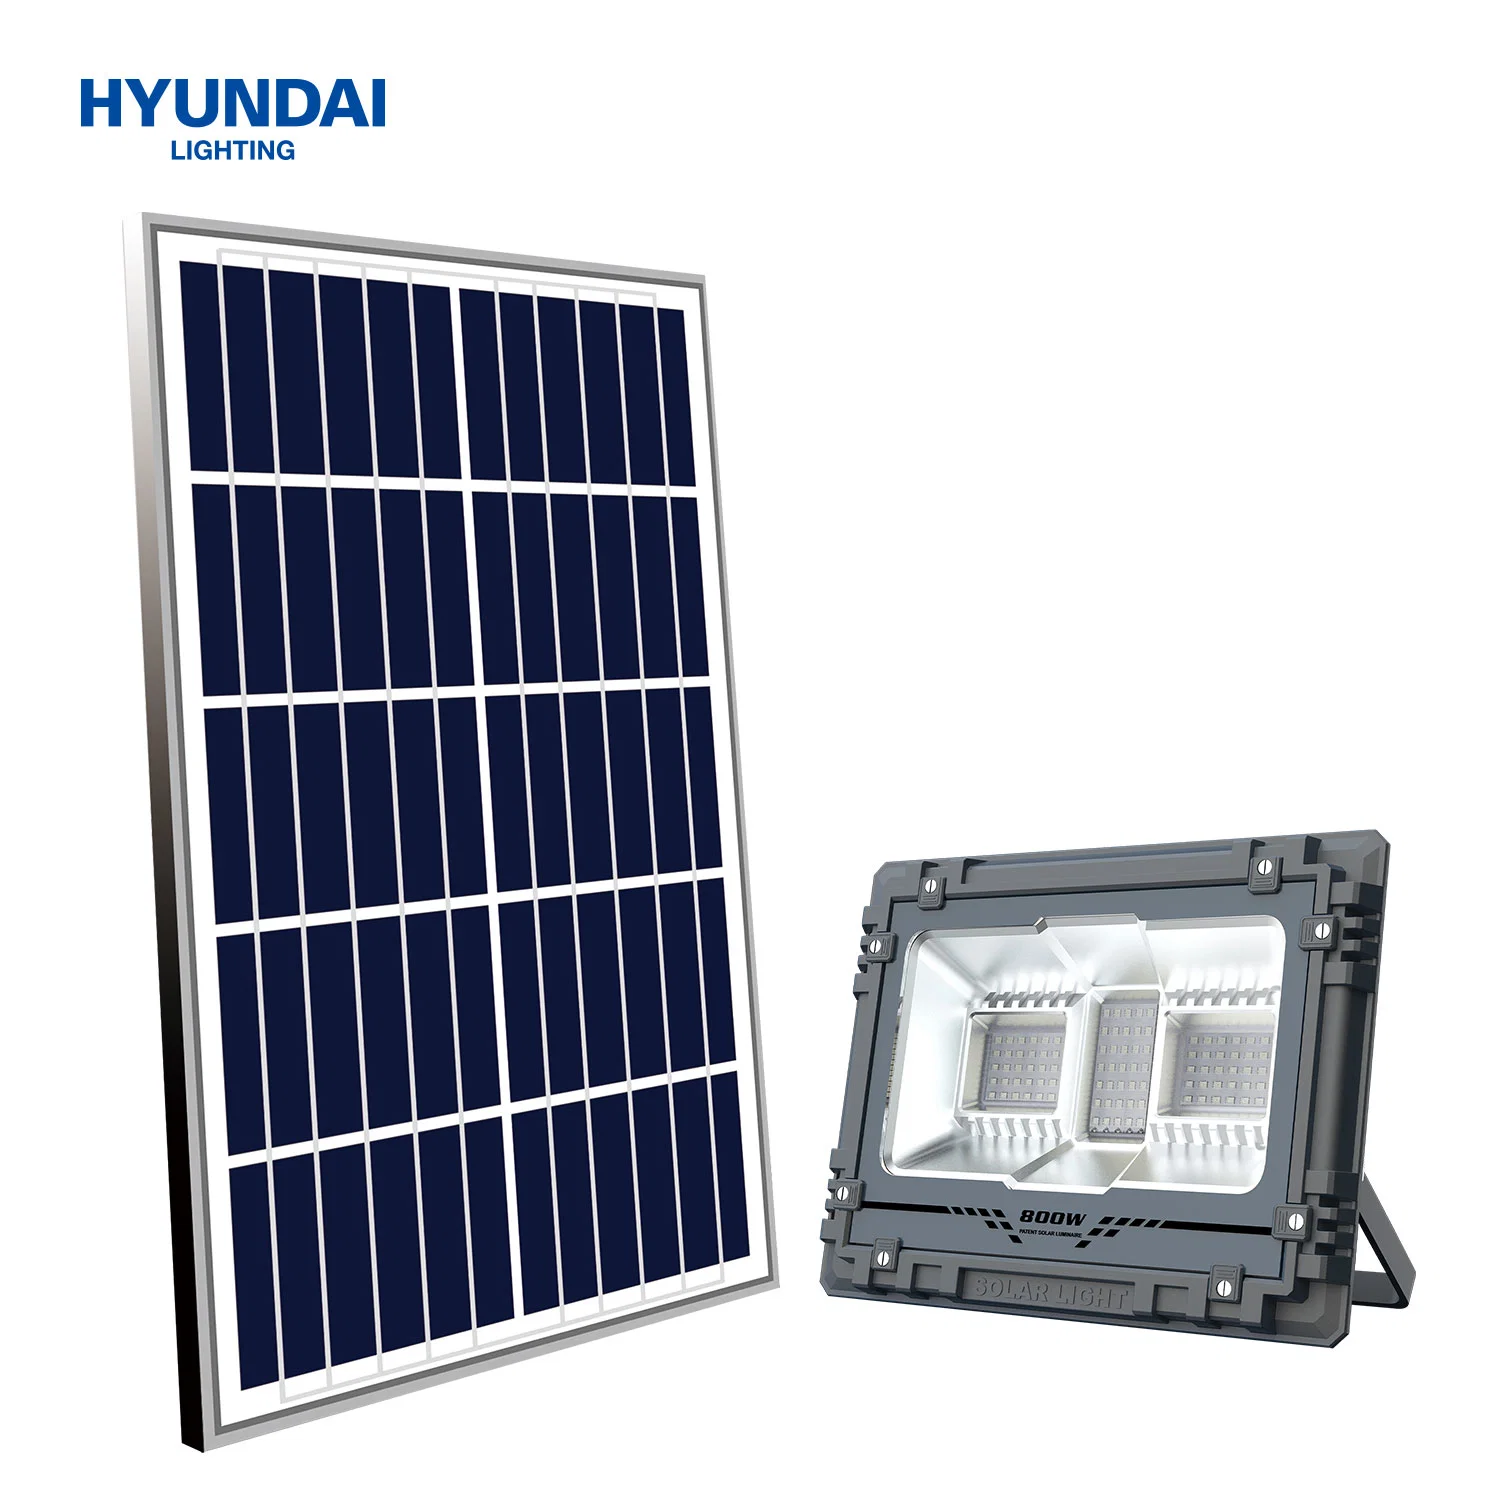 Hyundai Energy Saving Wholesale 60-800W IP65 Waterproof Outdoor Lamp Lights Solar Powered RGB Solar LED Garden Flood Street Lighting